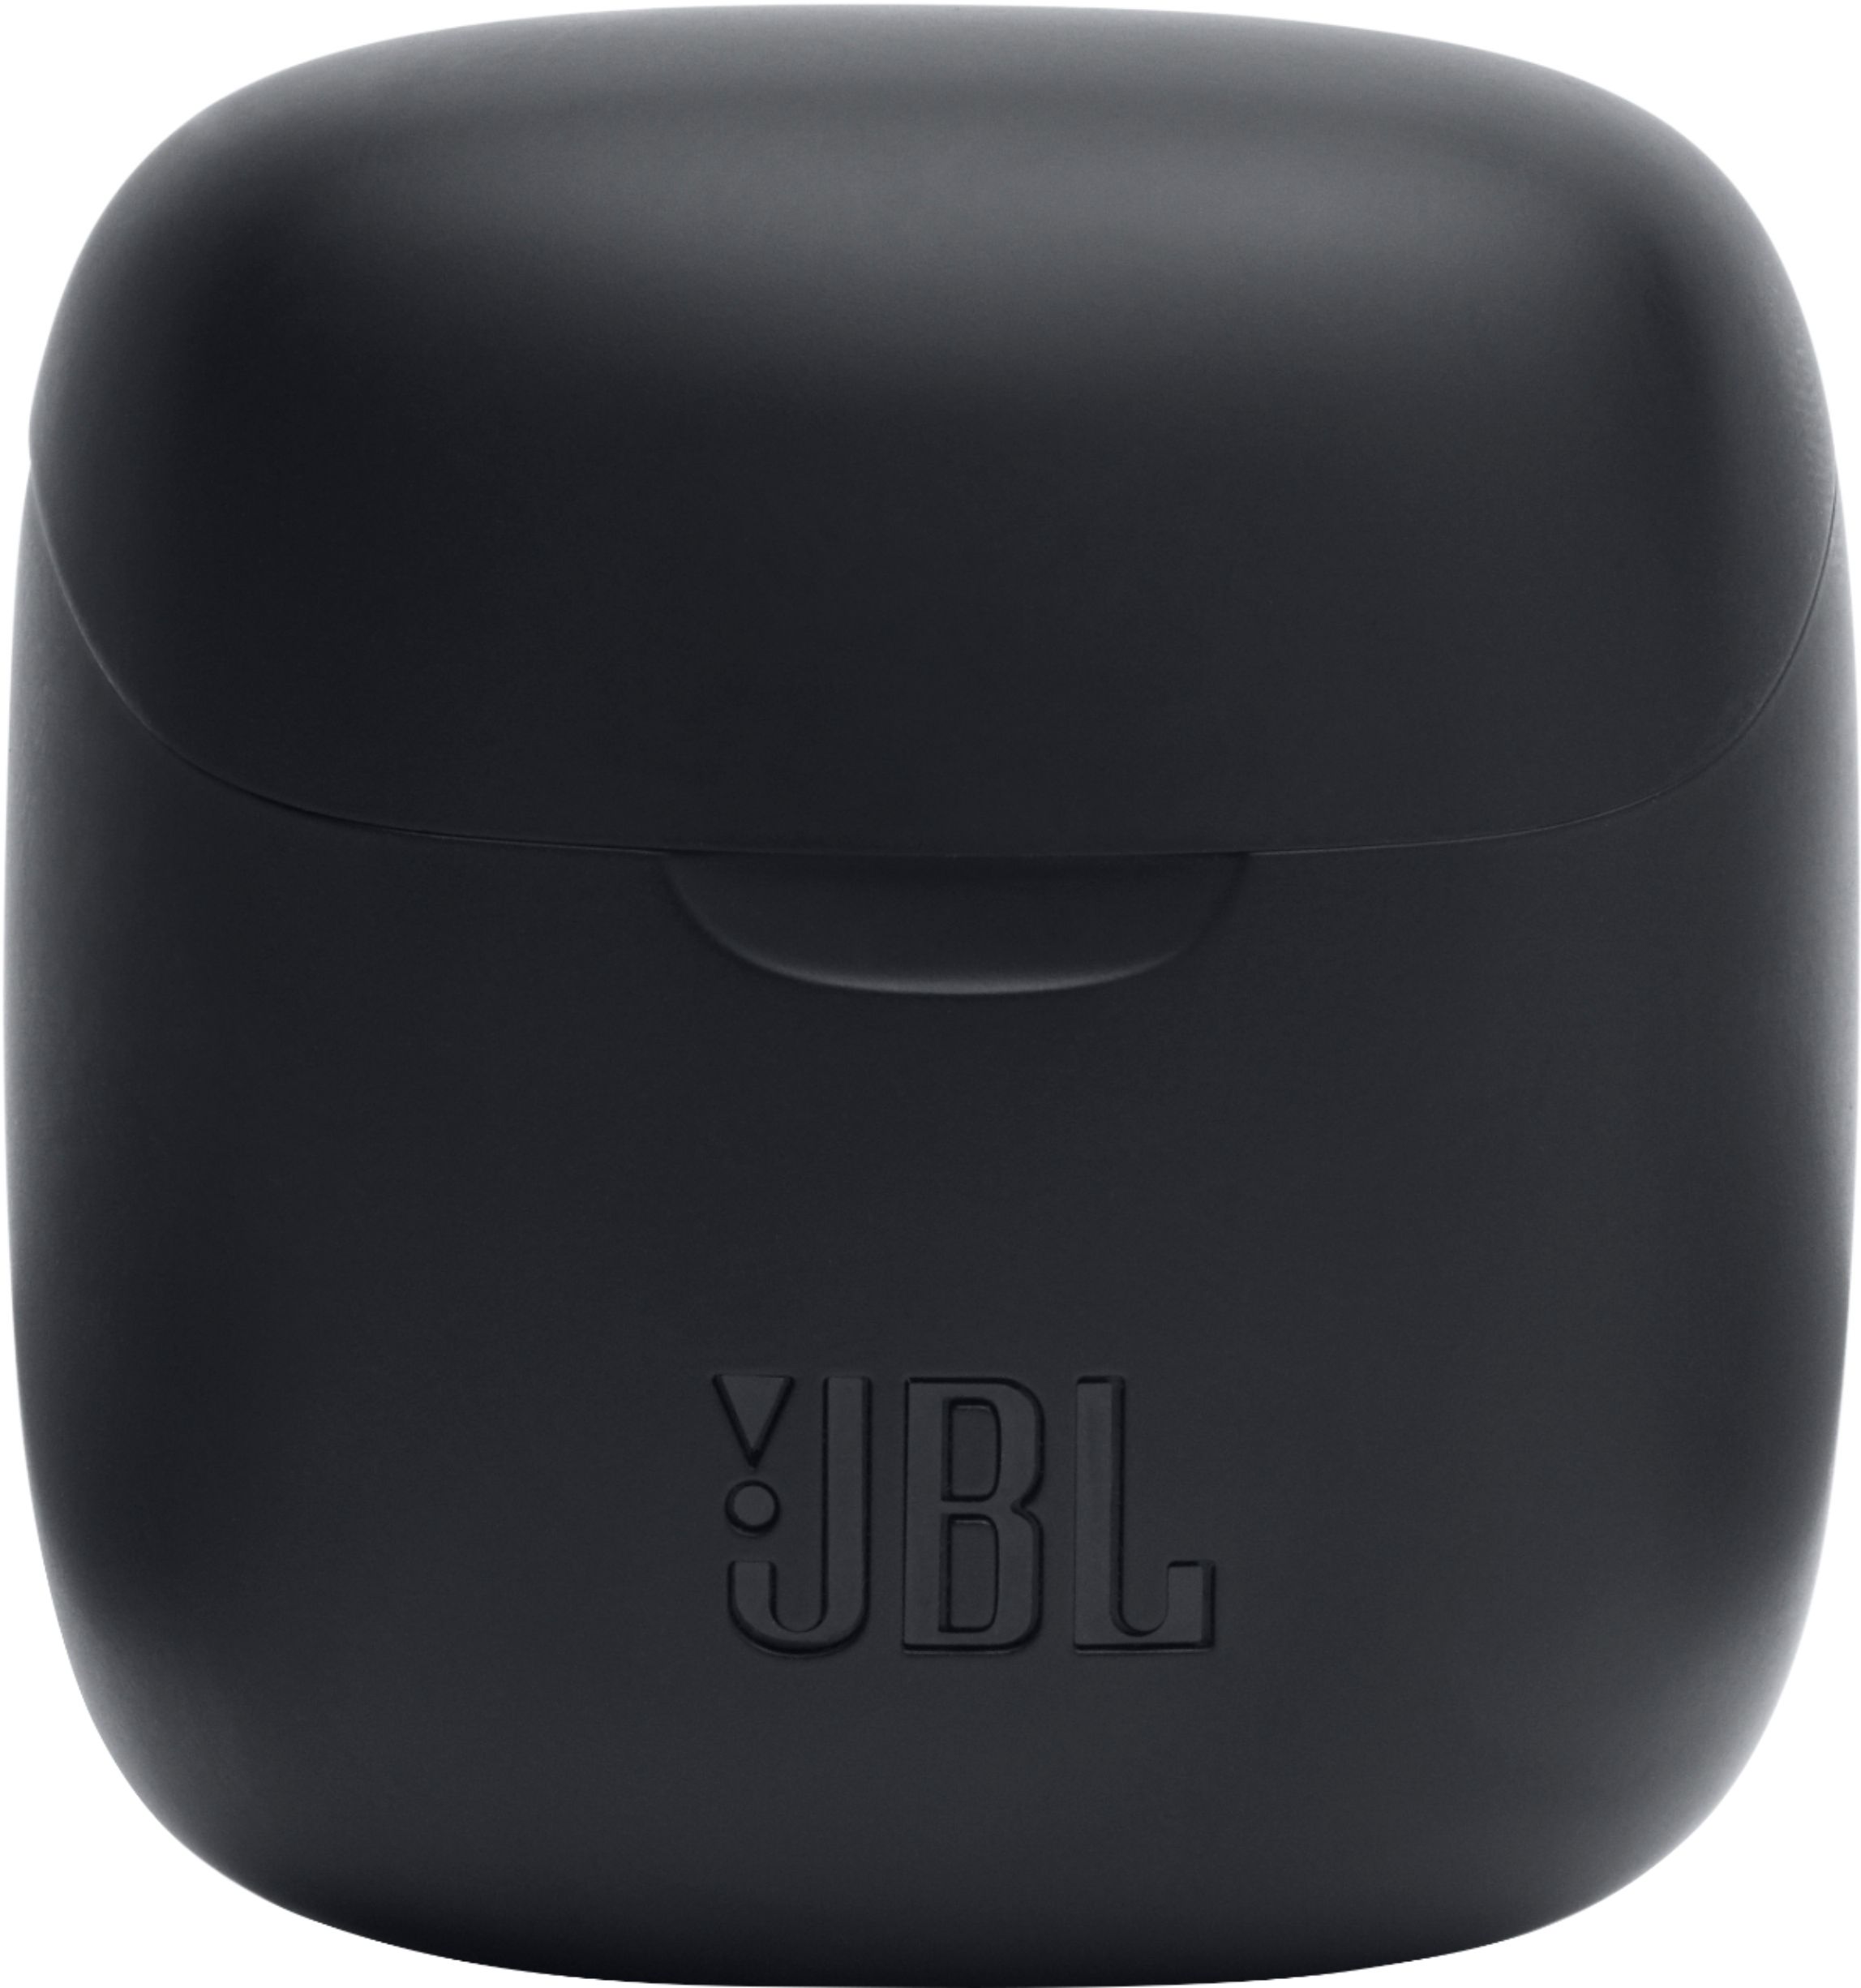 Audífonos JBL inalámbricos in ear T225 con Bluetooth, negro